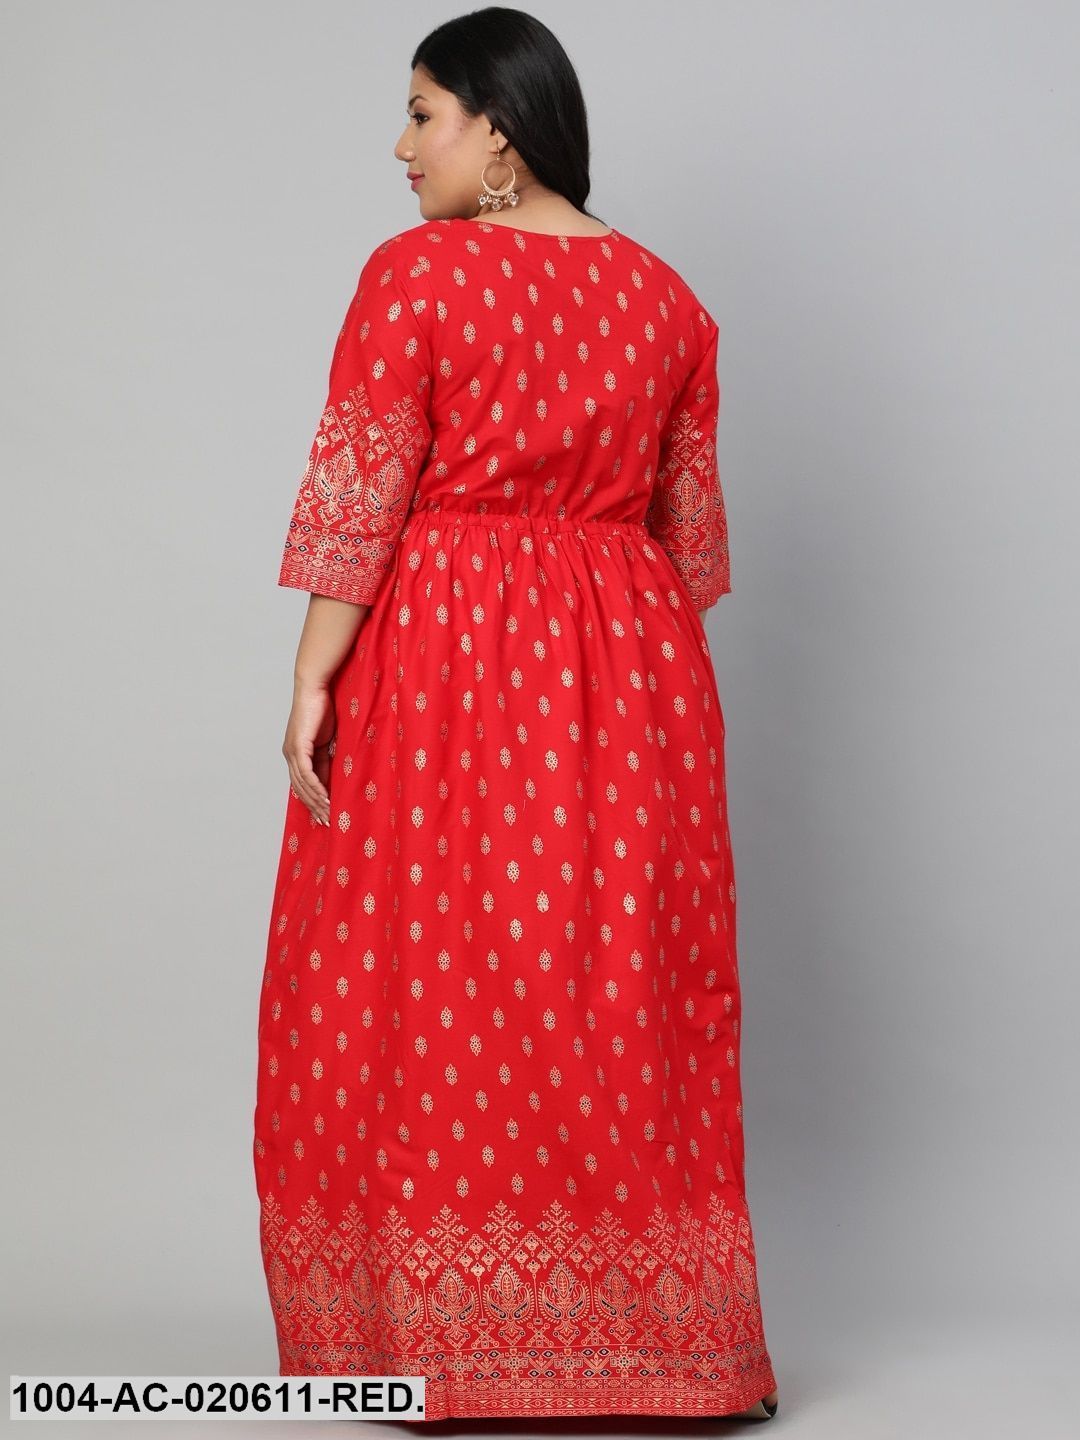 Plus Size Red & Gold Ethnic Motifs Ethnic Maxi Dress